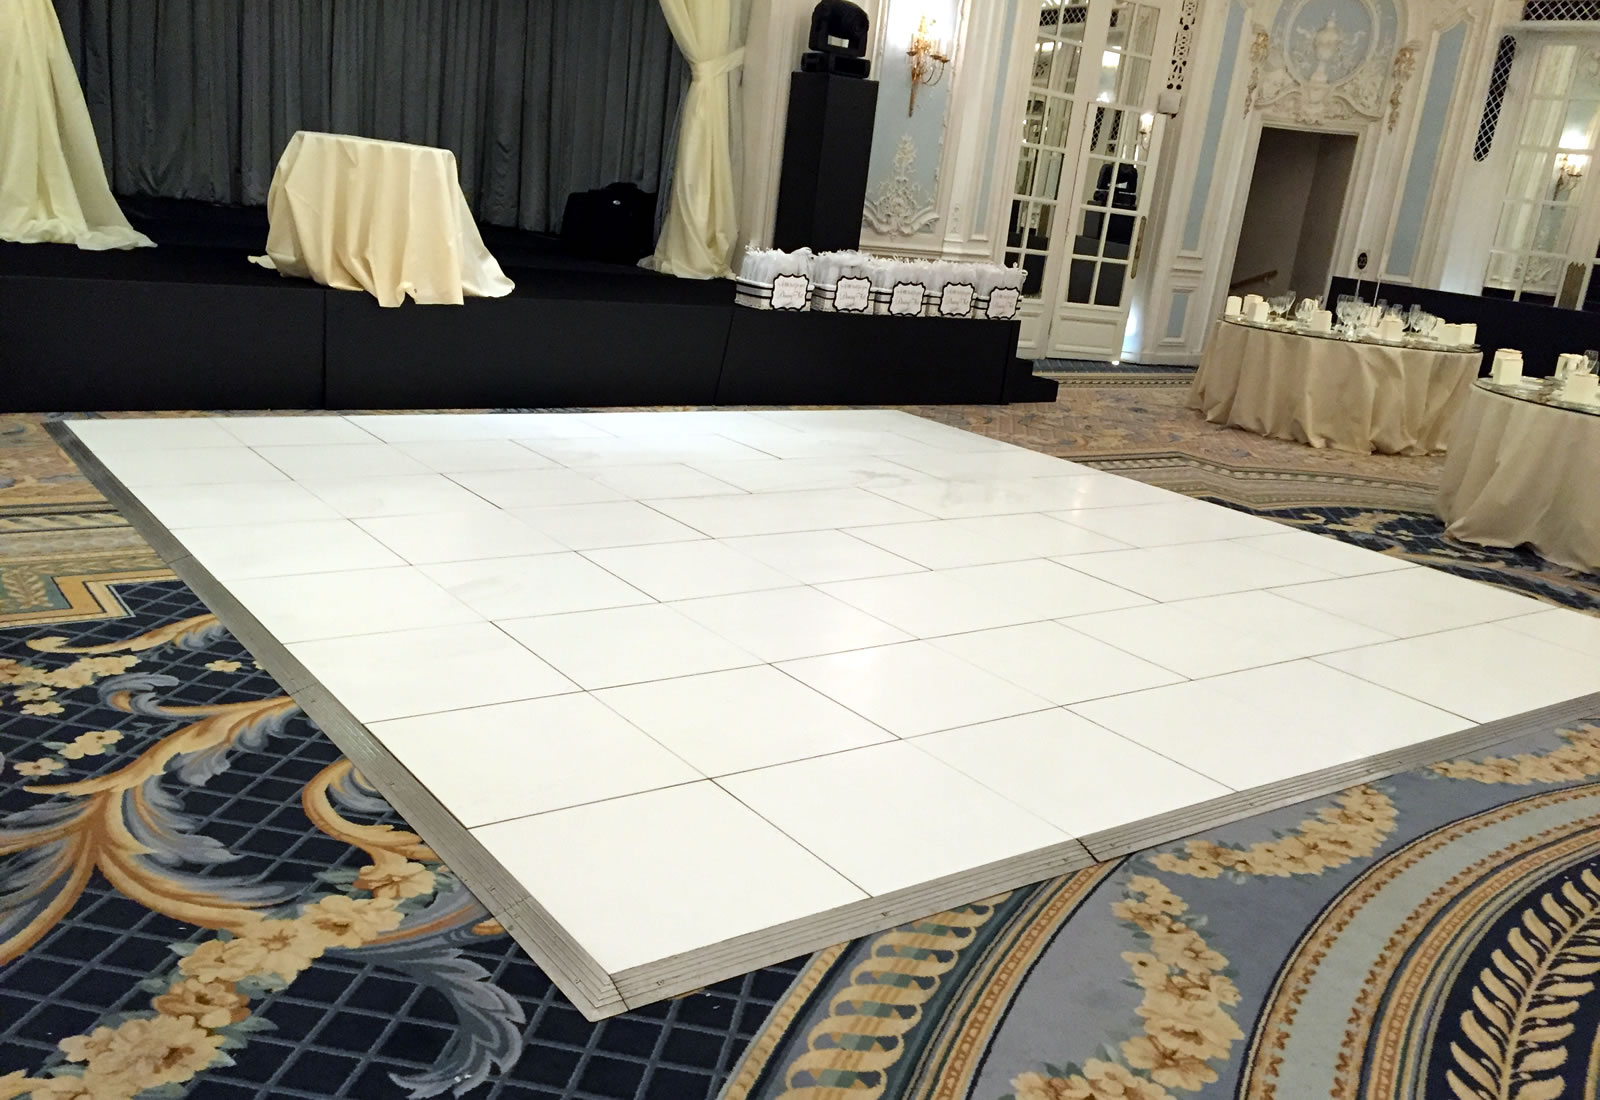 White dance floor in hotel function room